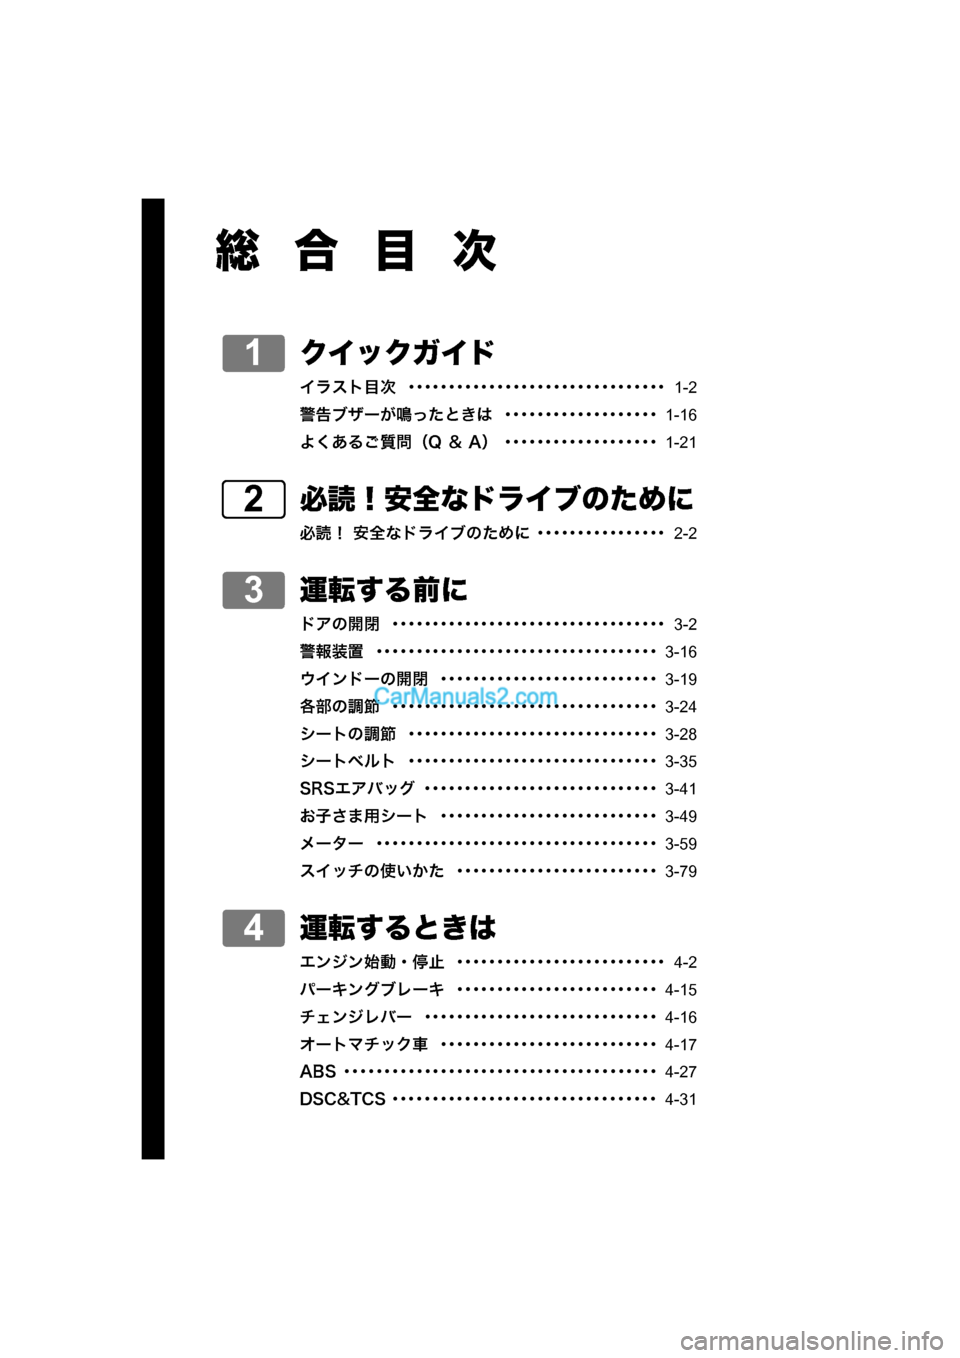 MAZDA MODEL CARROL 2015  取扱説明書 (キャロル) (in Japanese) 総合目次
クイックガイド
イラスト目次  ････････････････････････････････  1-2
警告ブザーが鳴ったときは  ･�